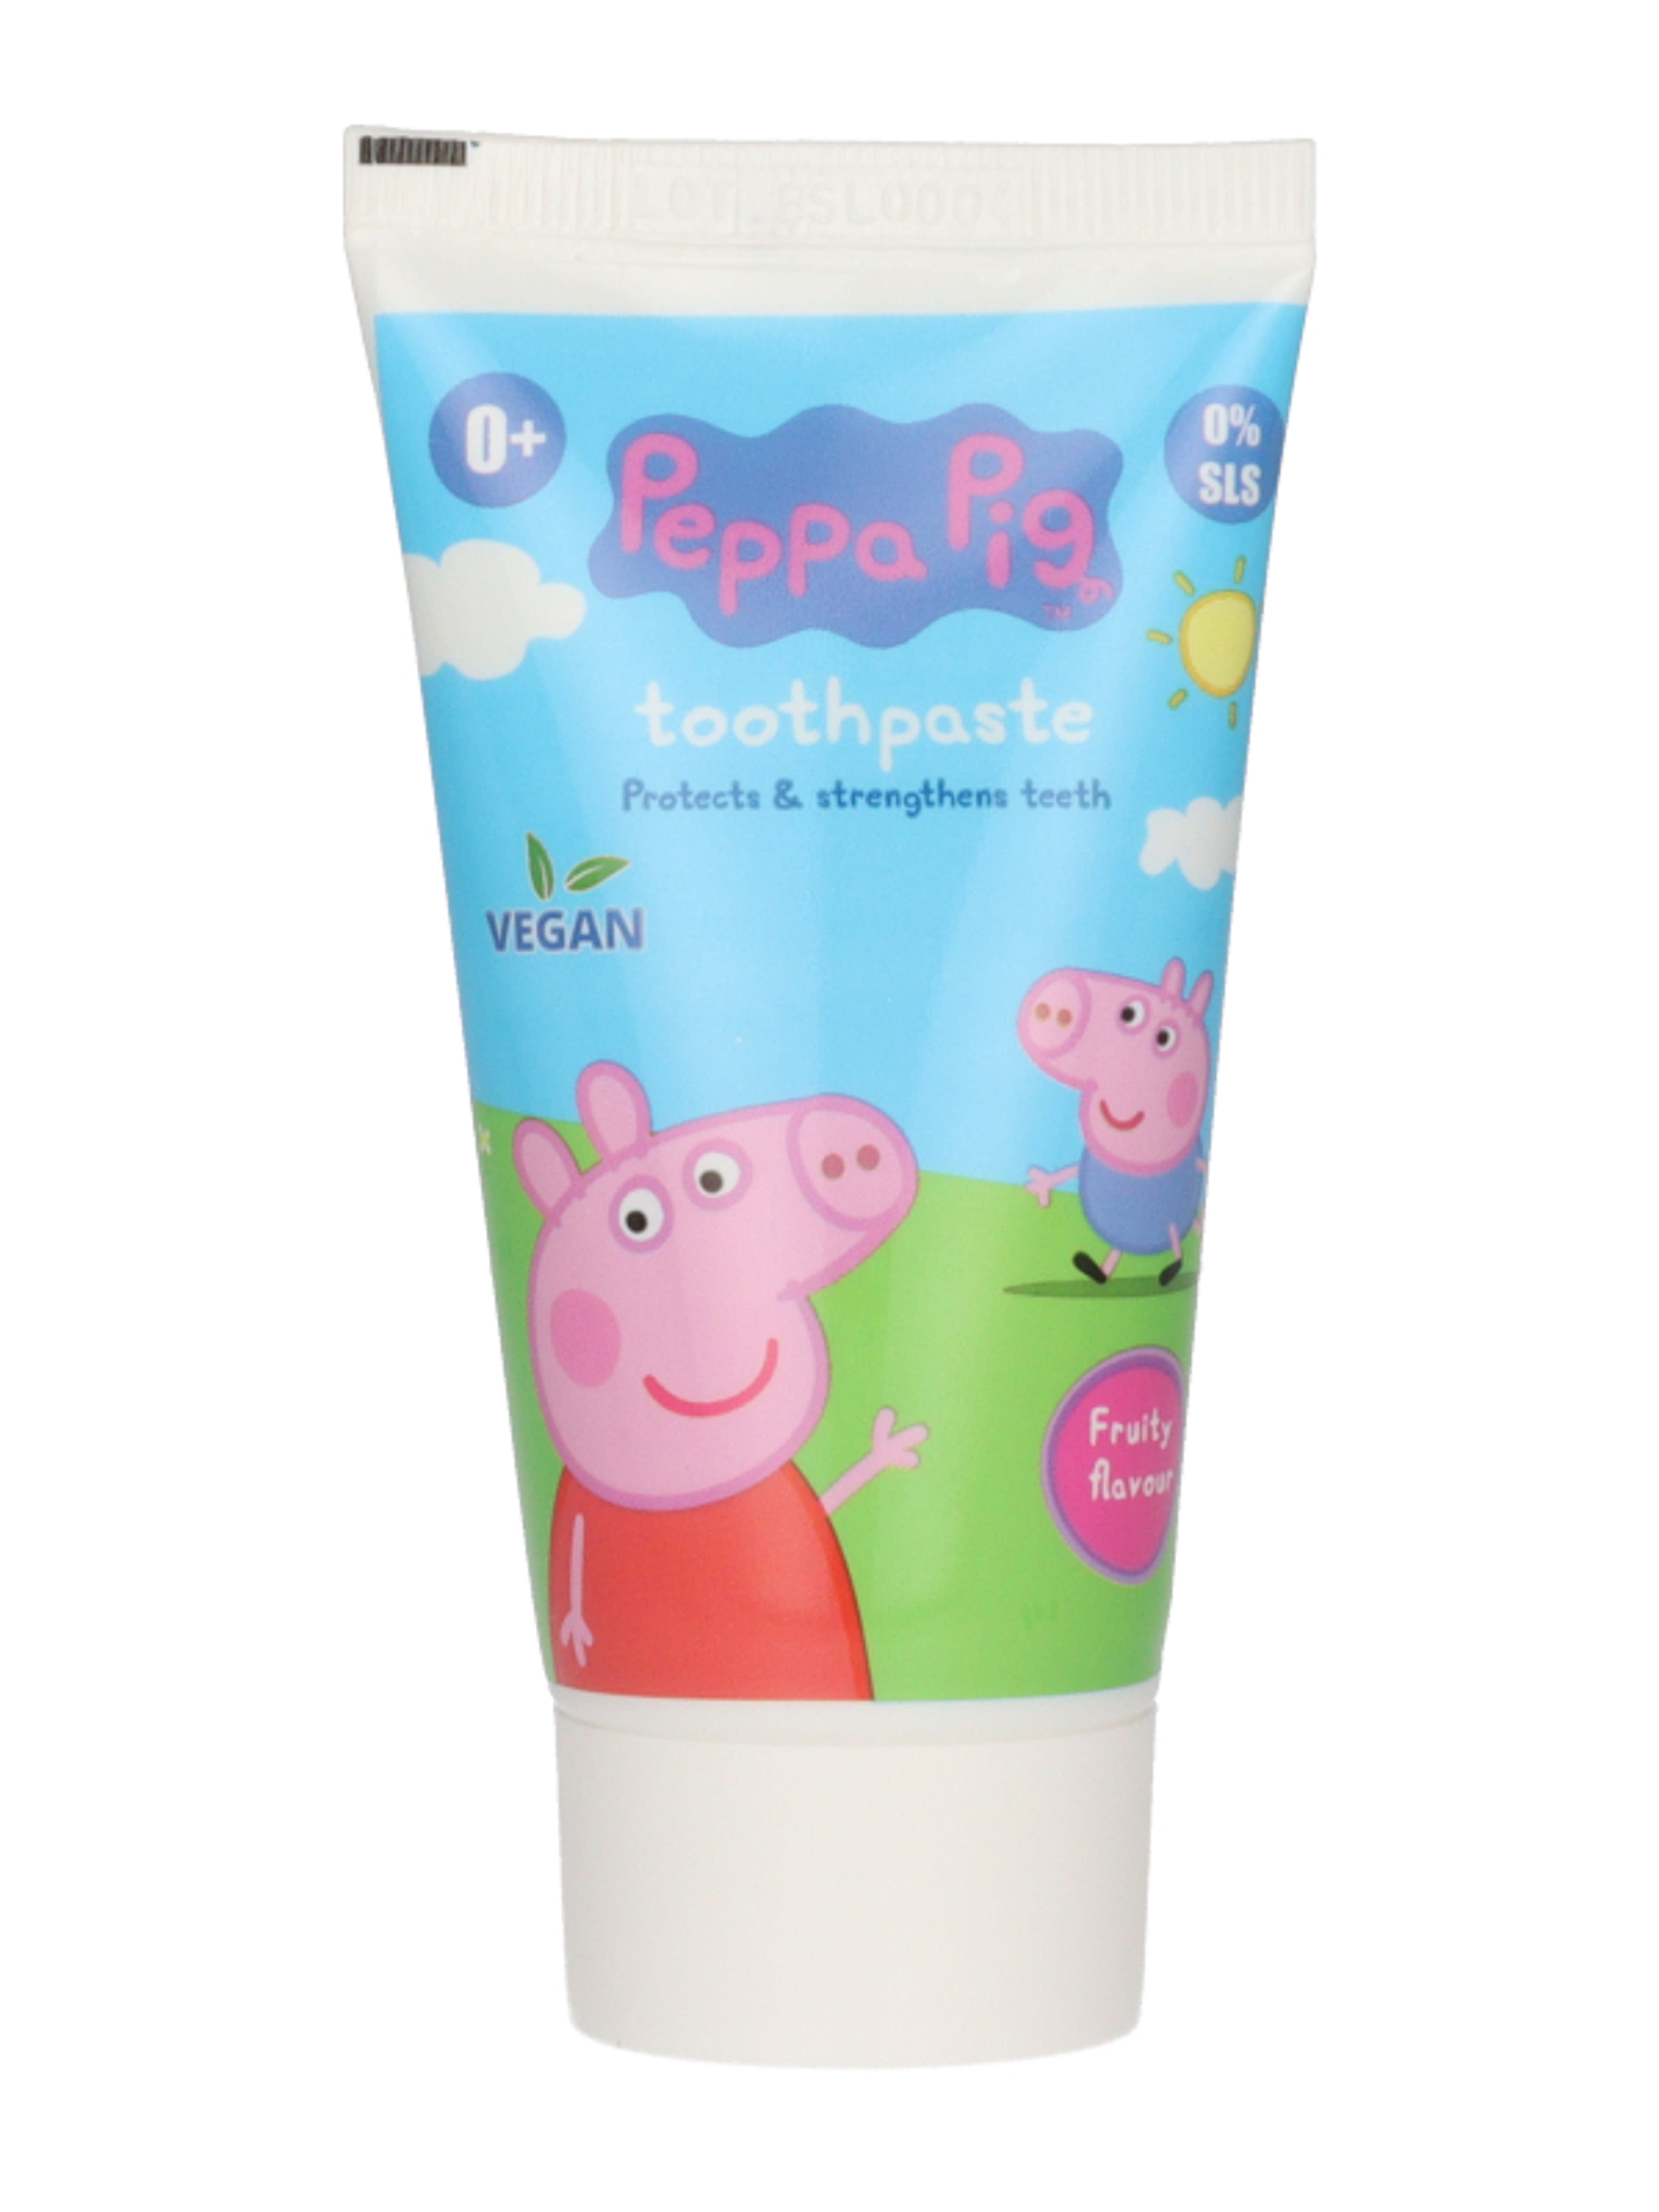 Peppa Pig gyerek fogkrém 0-5 éves korig - 50 ml